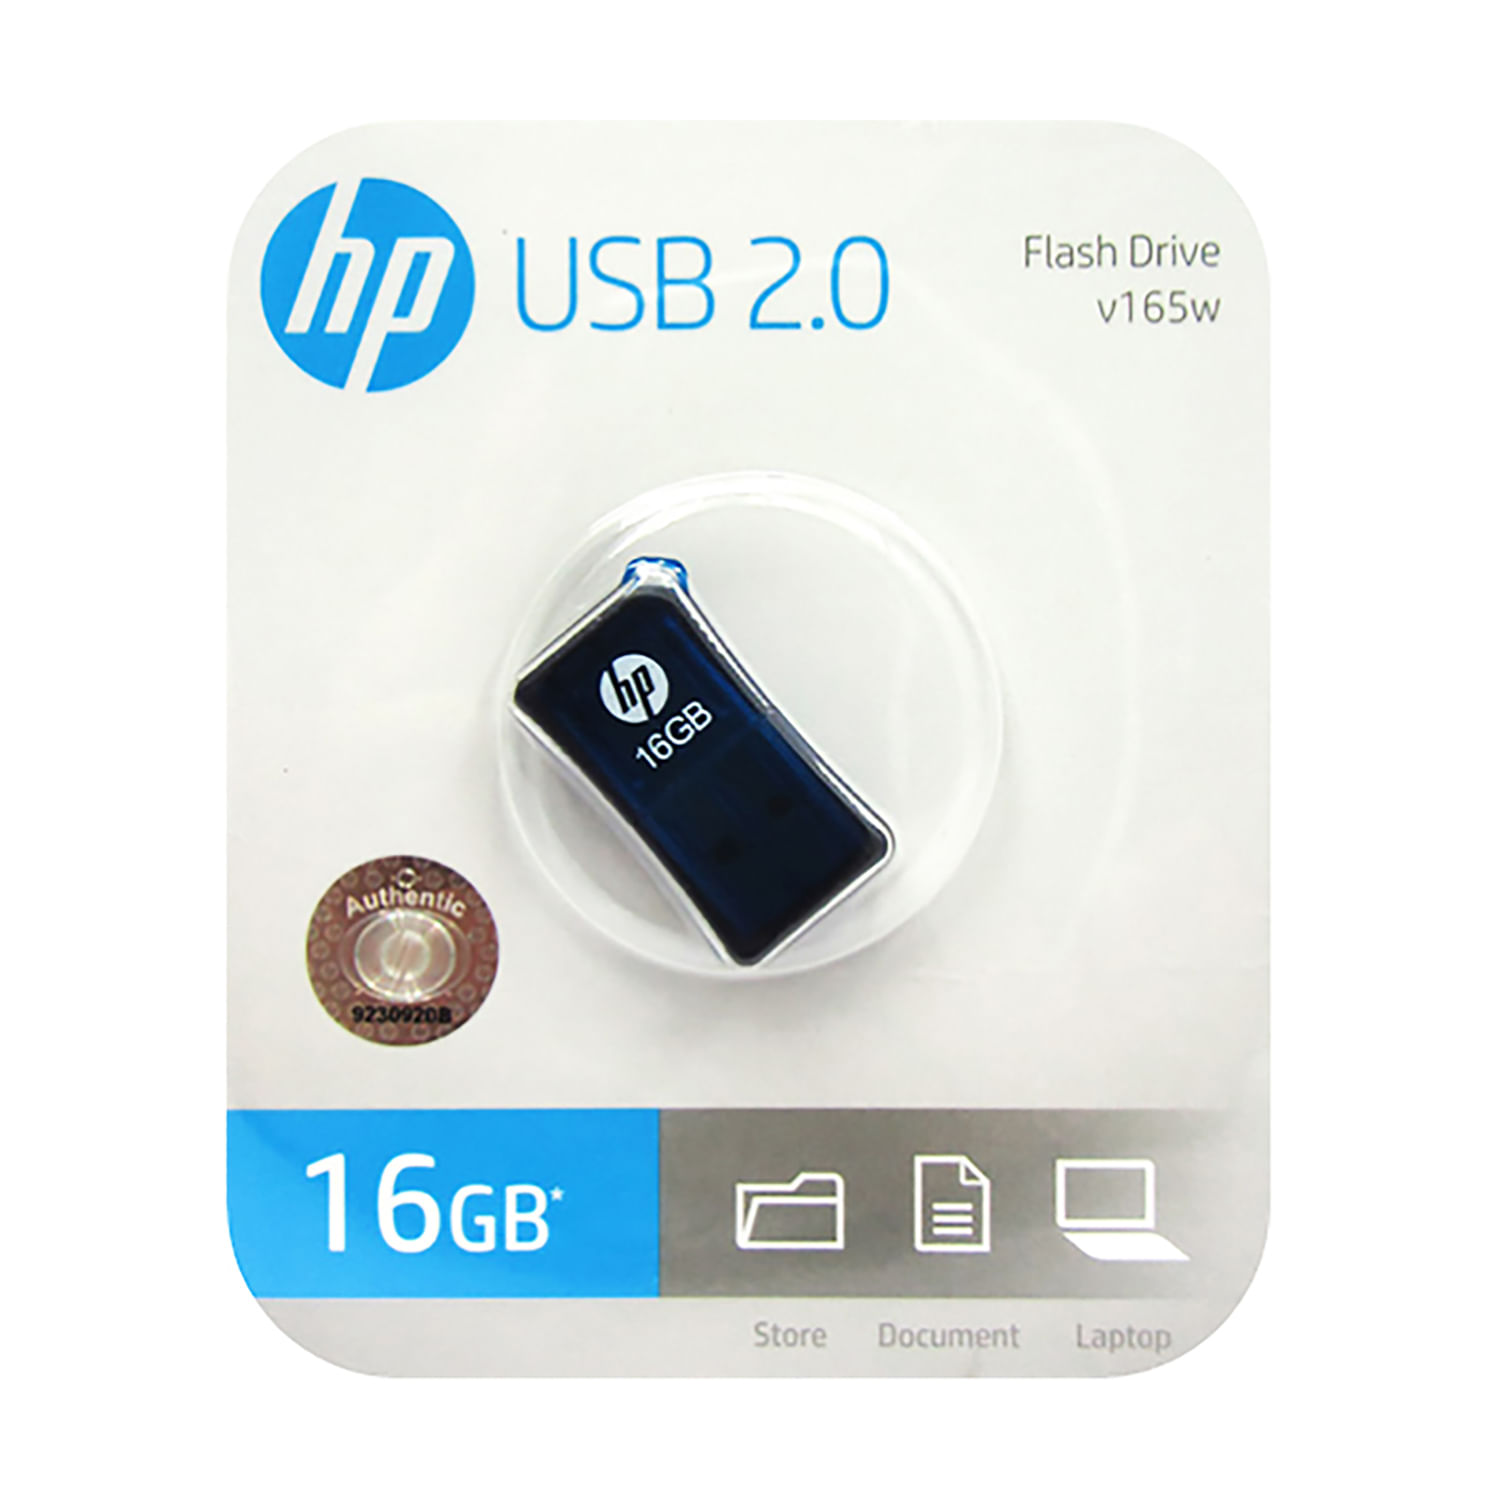 Memoria USB HP 2.0 Flash Drive V165w 16GB Azul